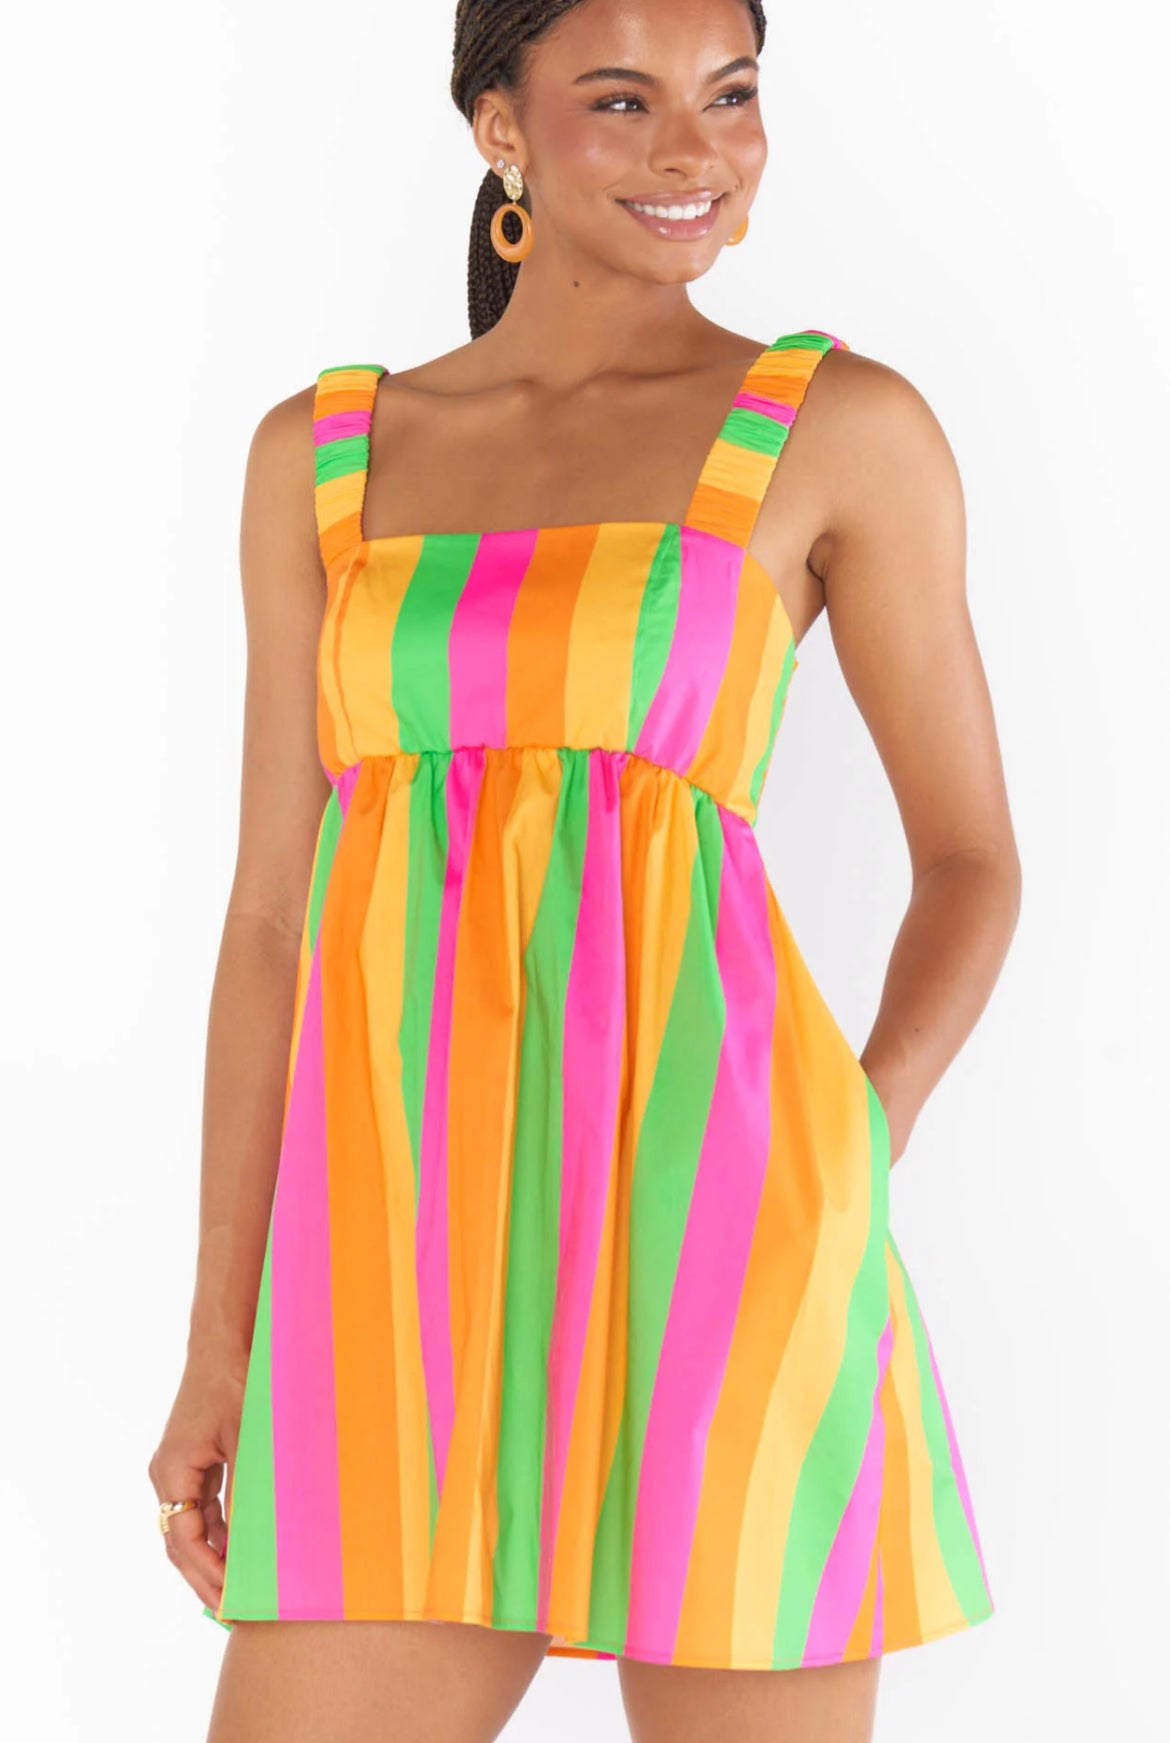 Show Me Your Mumu Fling Mini Dress in Colorful Stripe